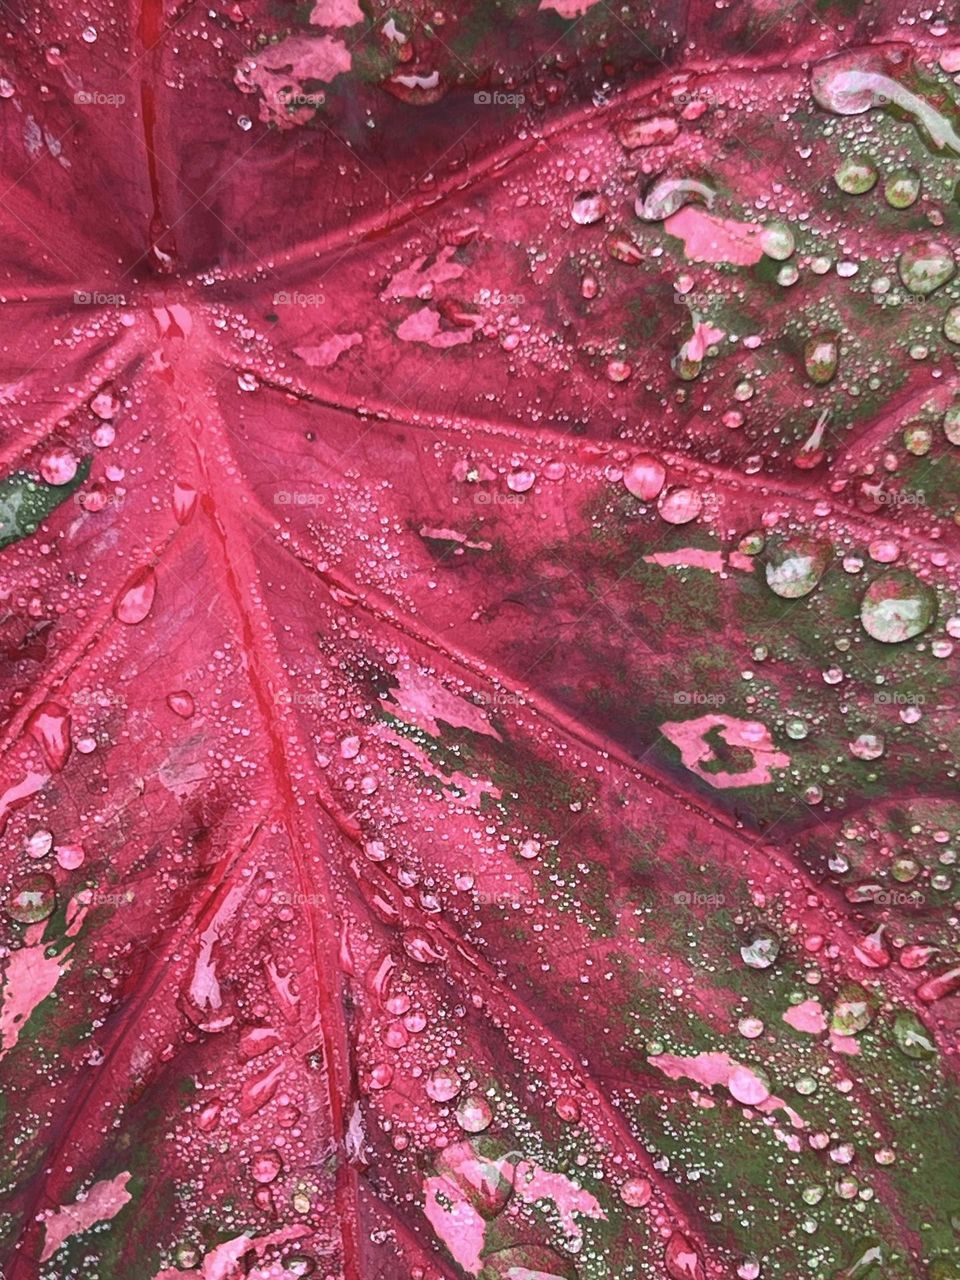 Raindrops on the Angel wings leaf